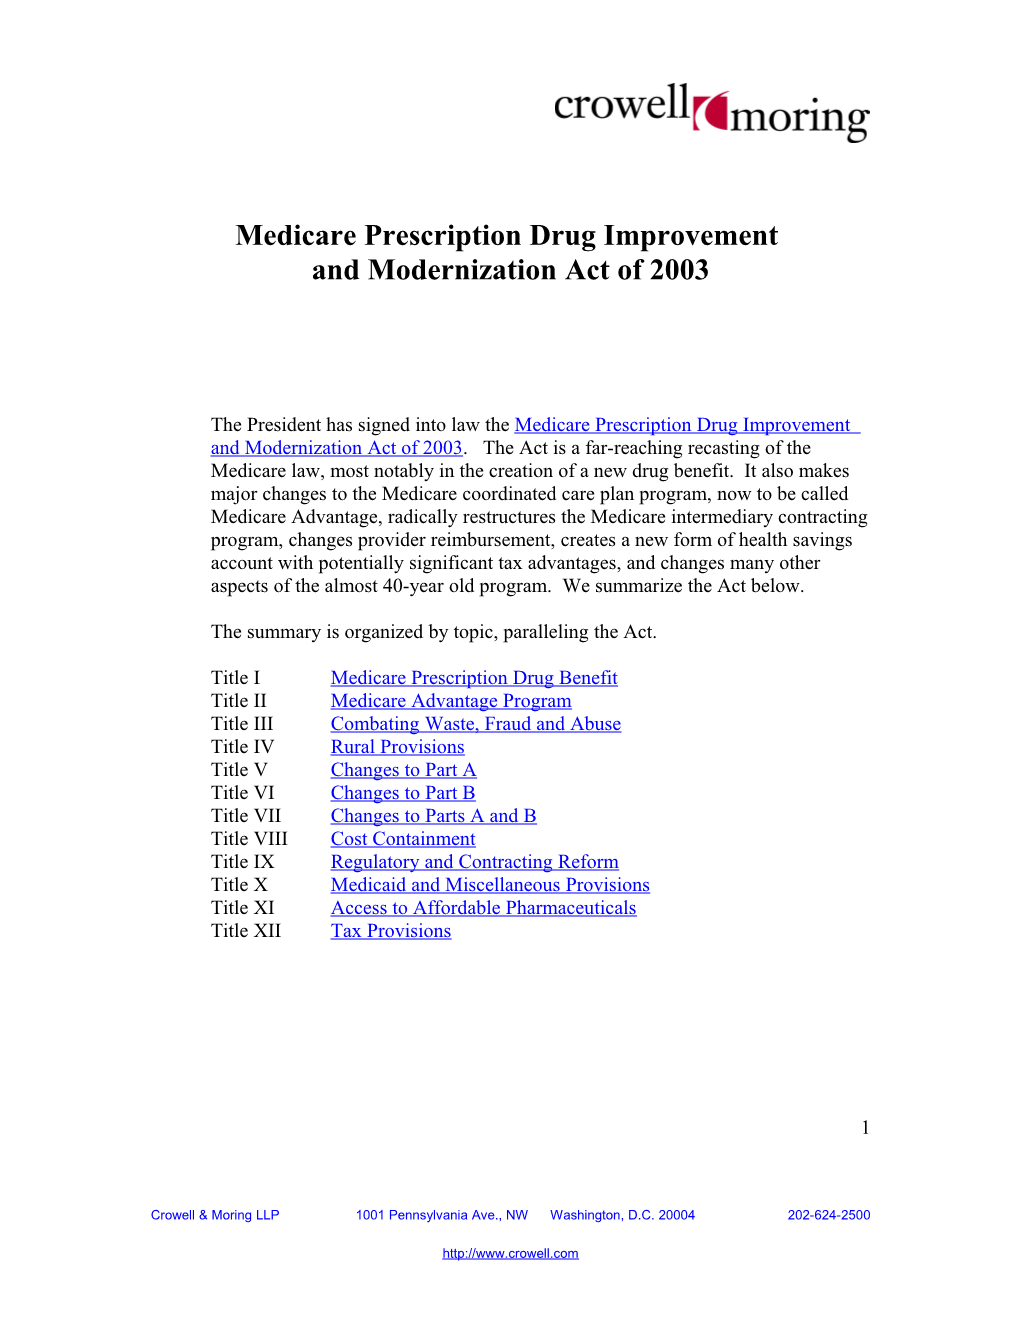 The Medicare Prescription Drug Improvement